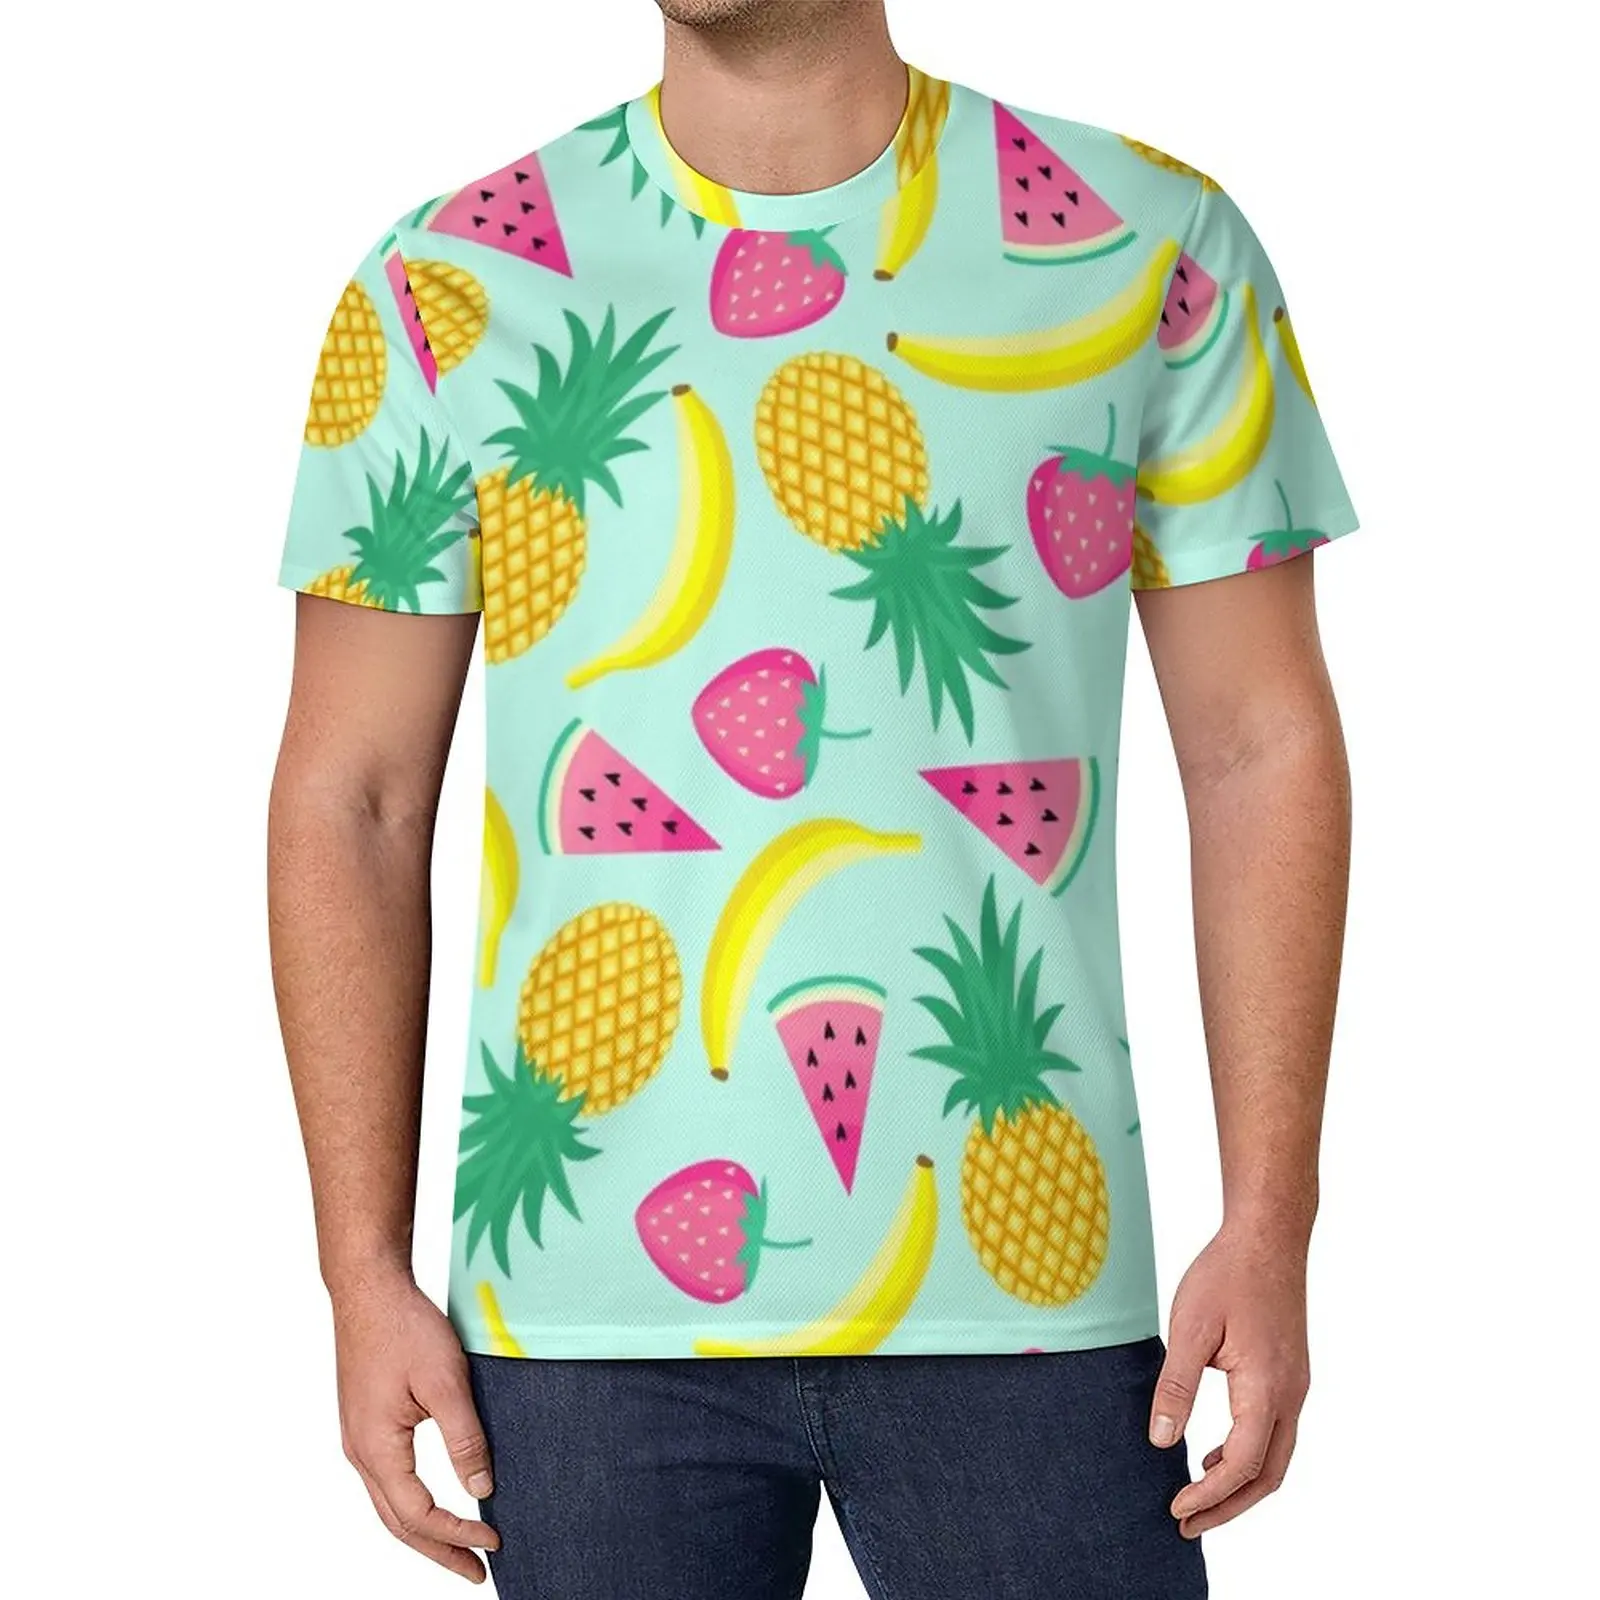 

Banana Pineapple T Shirt Funky Fruit Print Casual T-Shirts Harajuku Tee Shirt Man Graphic Top Tees Plus Size 5XL 6XL